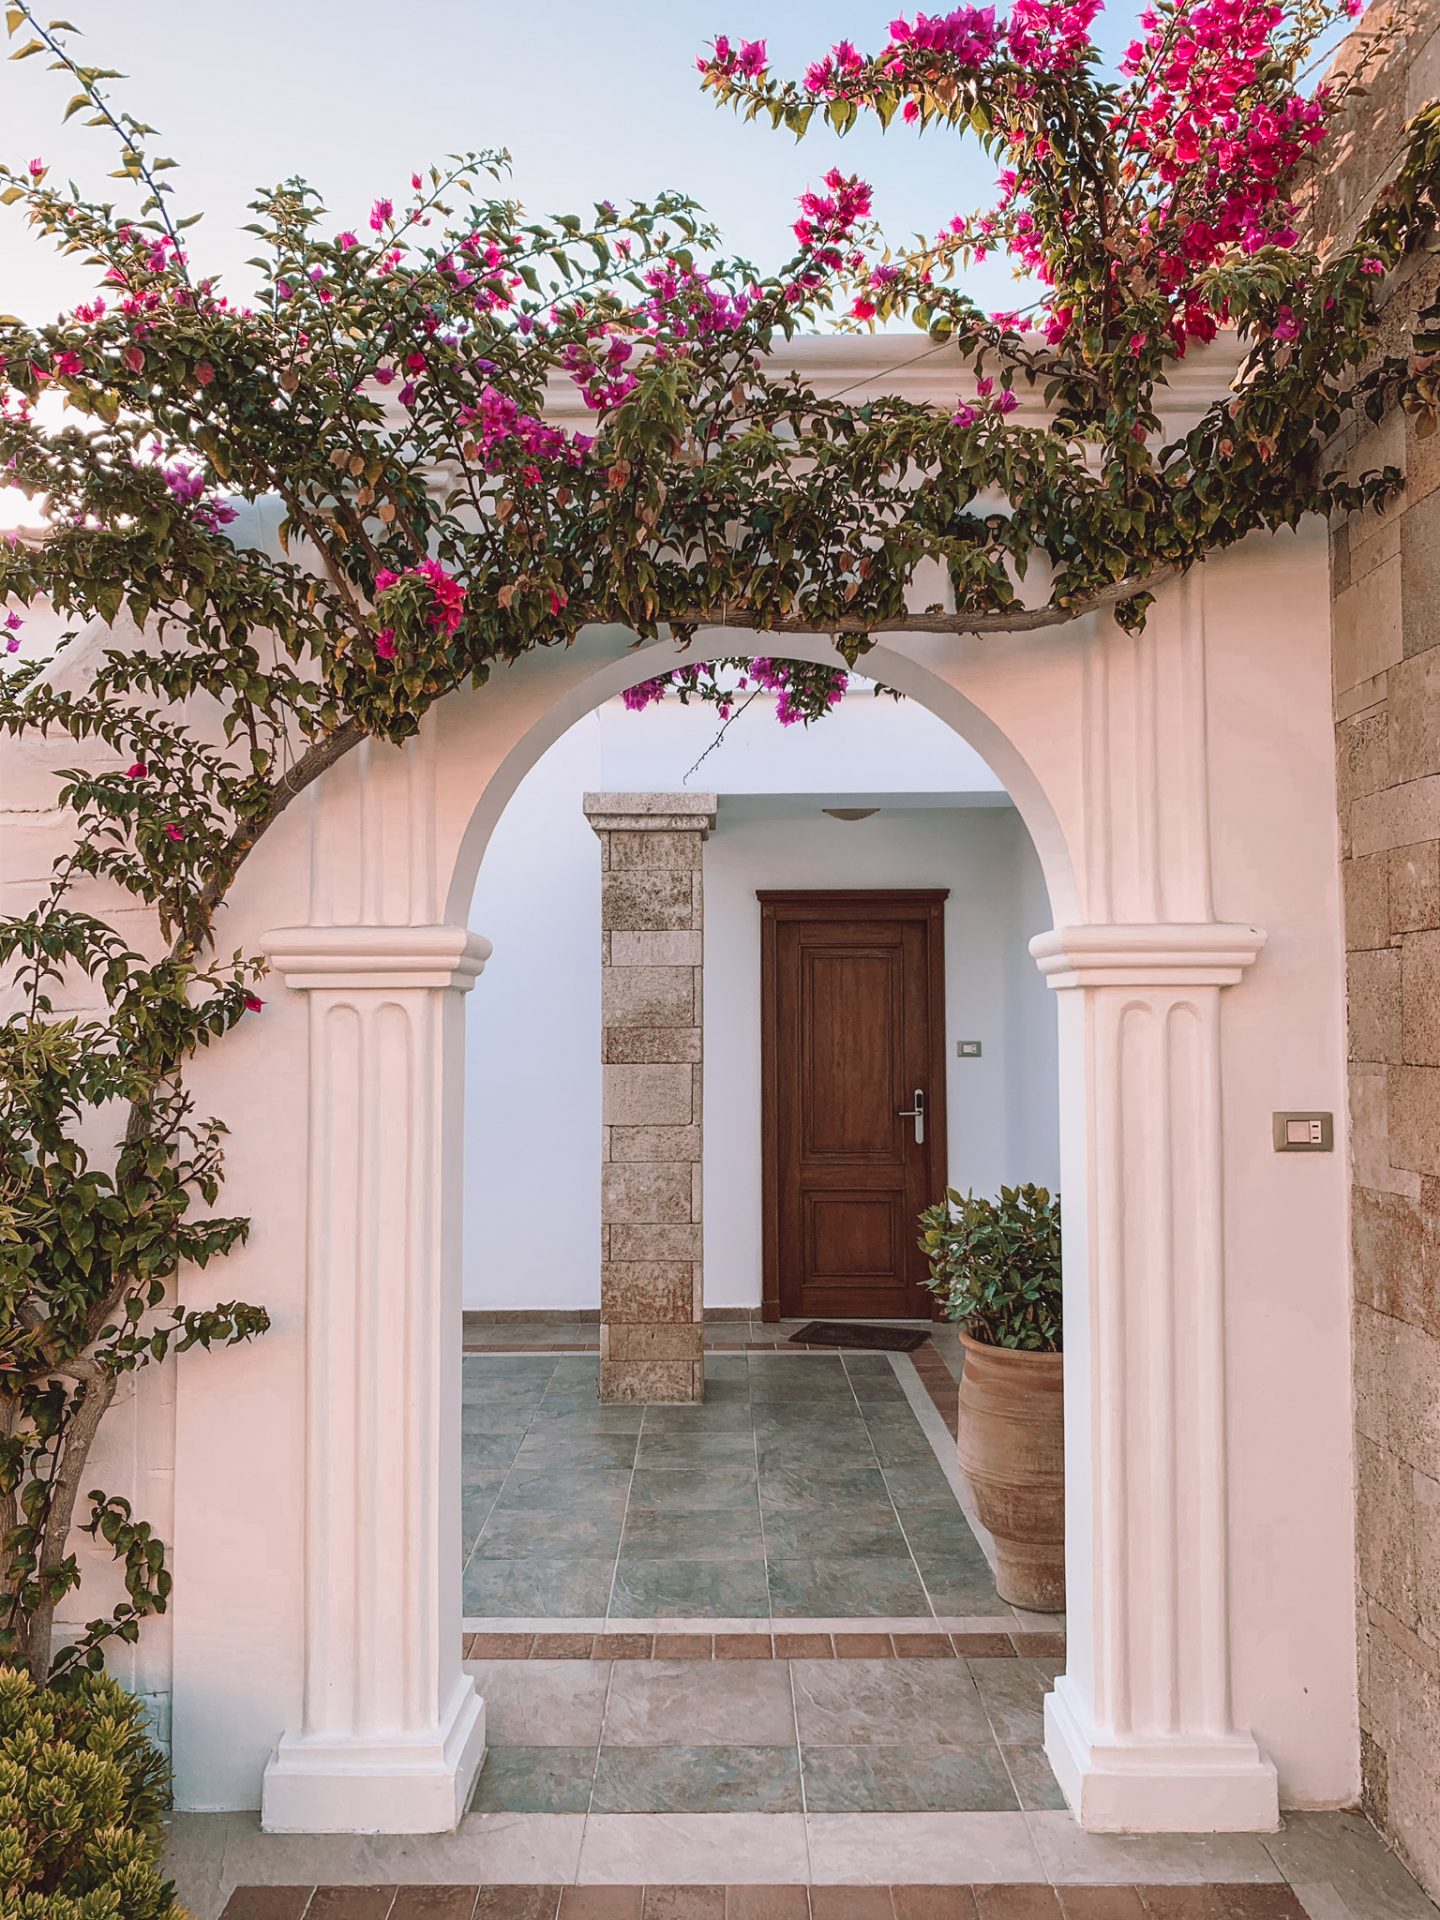 Atrium Prestige Thalasso Spa Resort and Villas | Rhodes Greece | Greece Holiday | Sea View Hotel | Private Pool Hotel